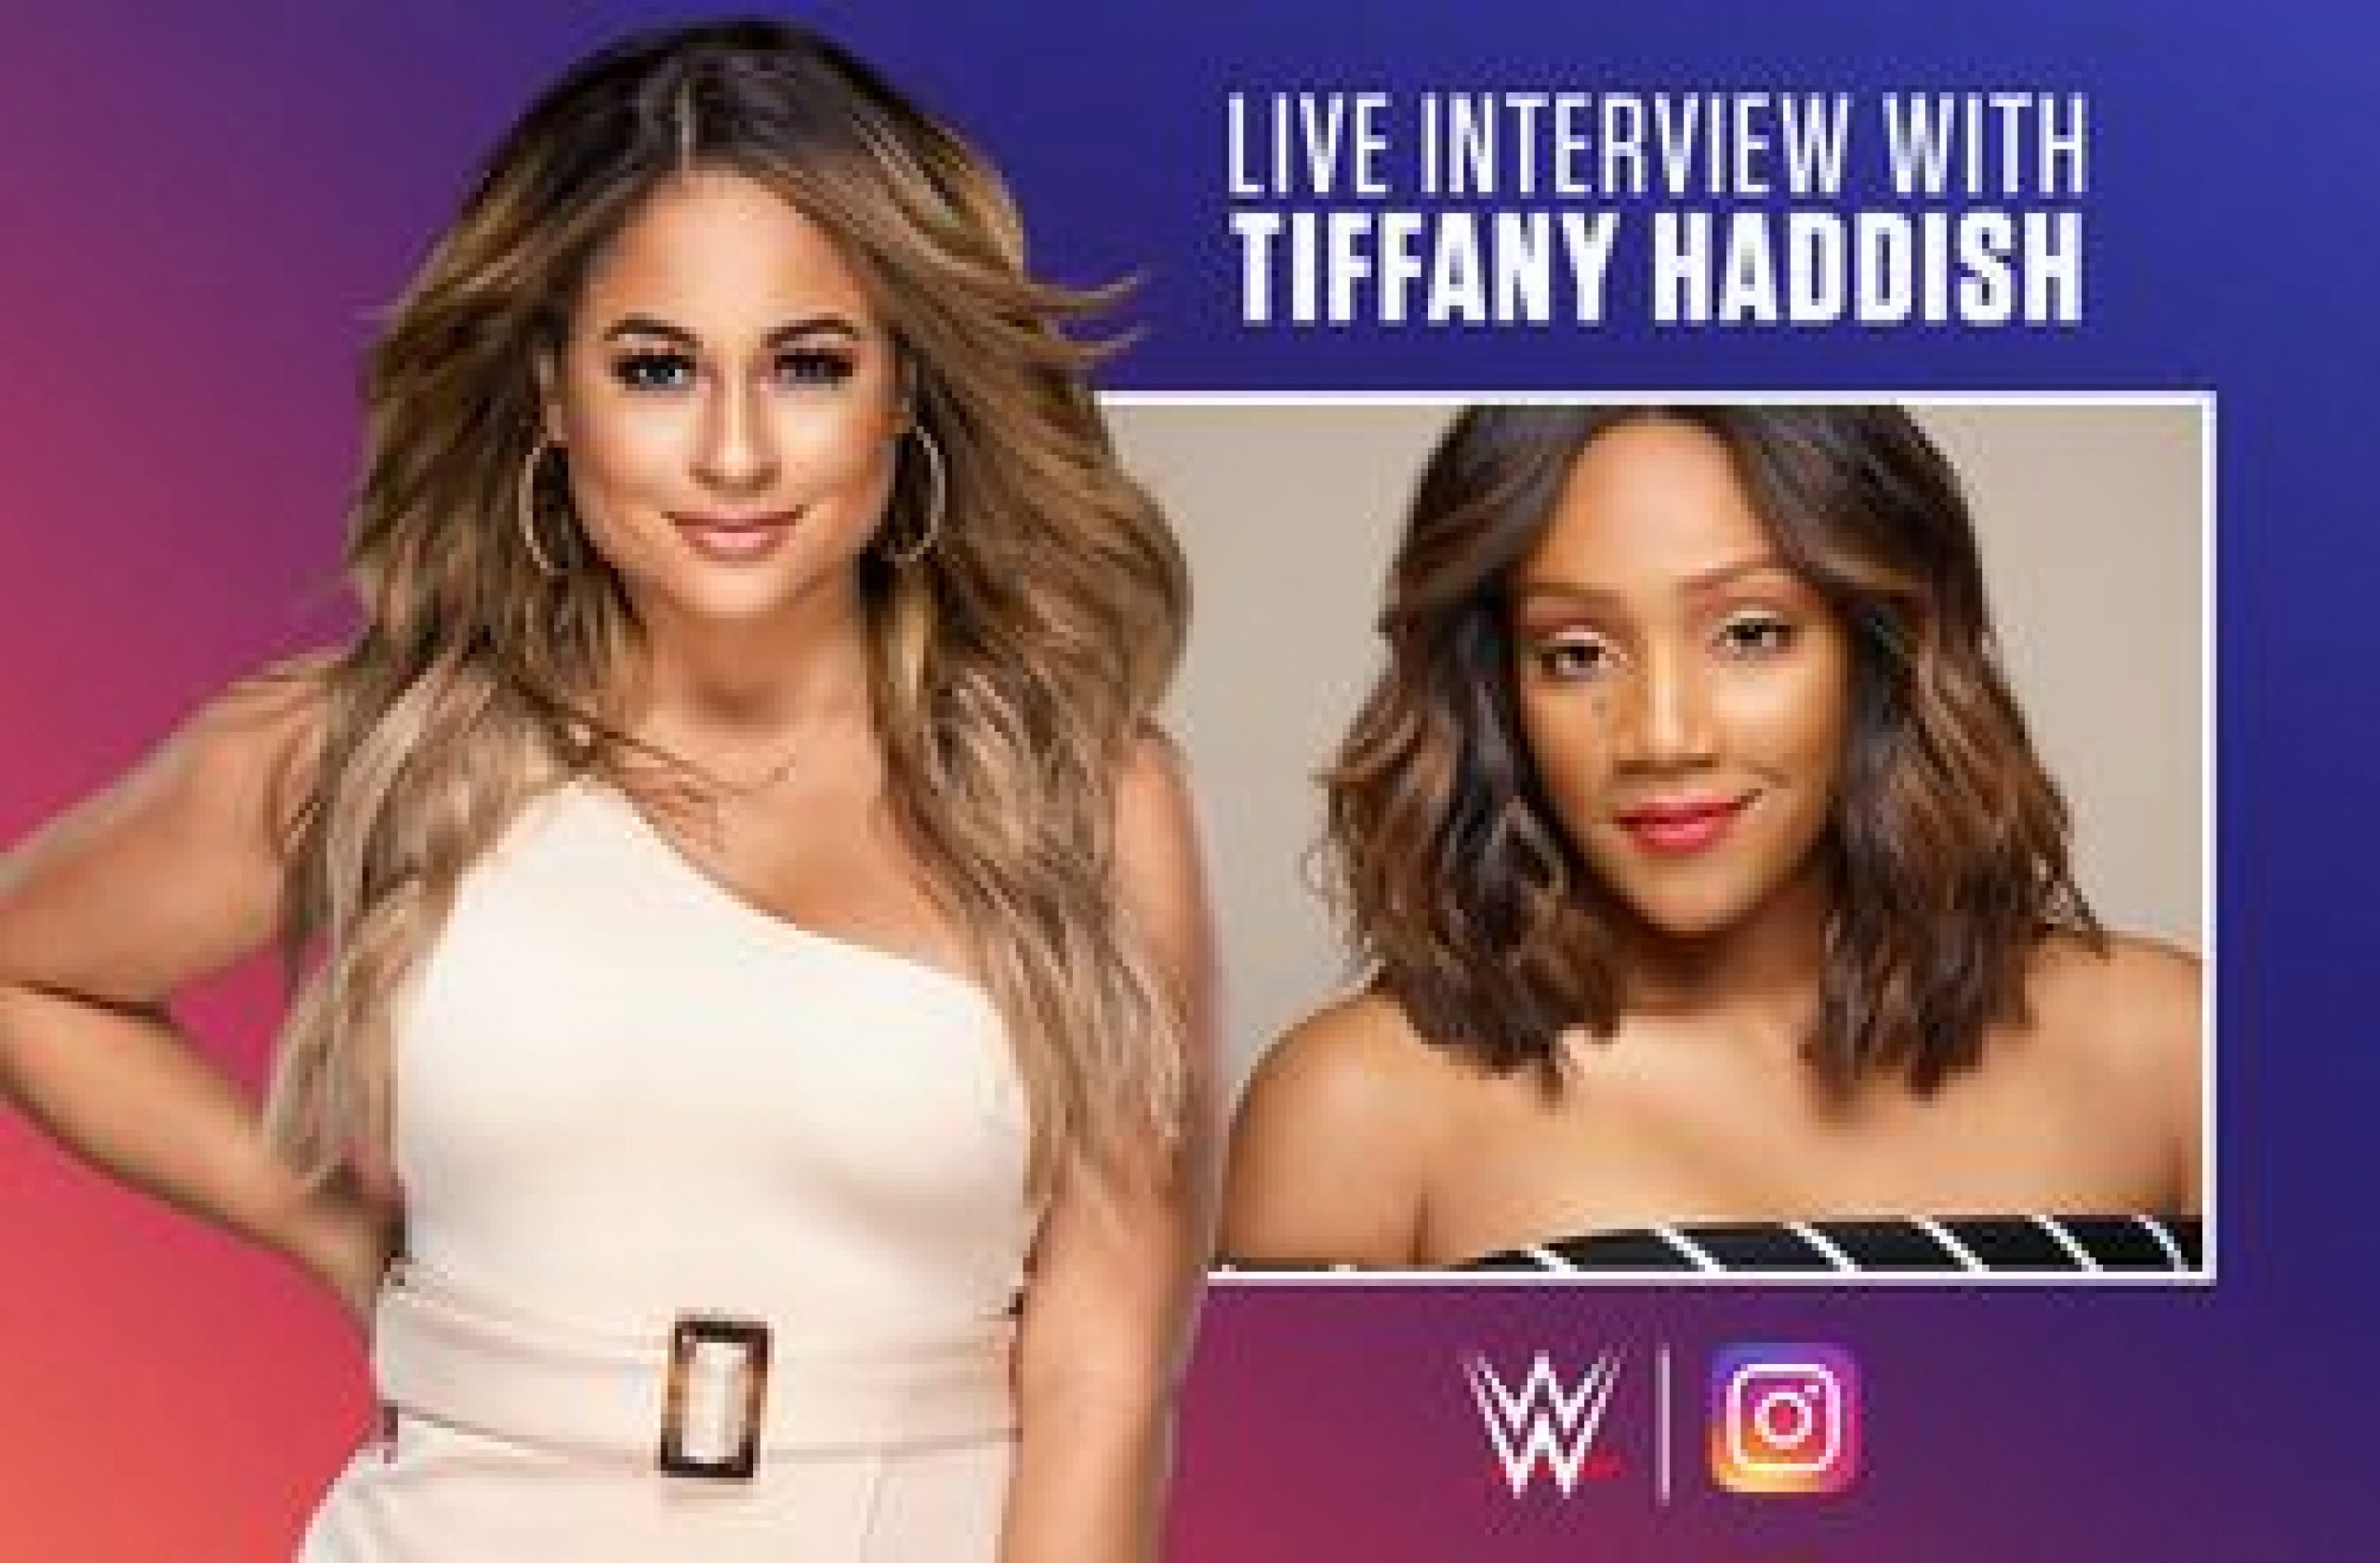 Tiffany Haddish joins Kayla Braxton live on WWE’s Instagram channel